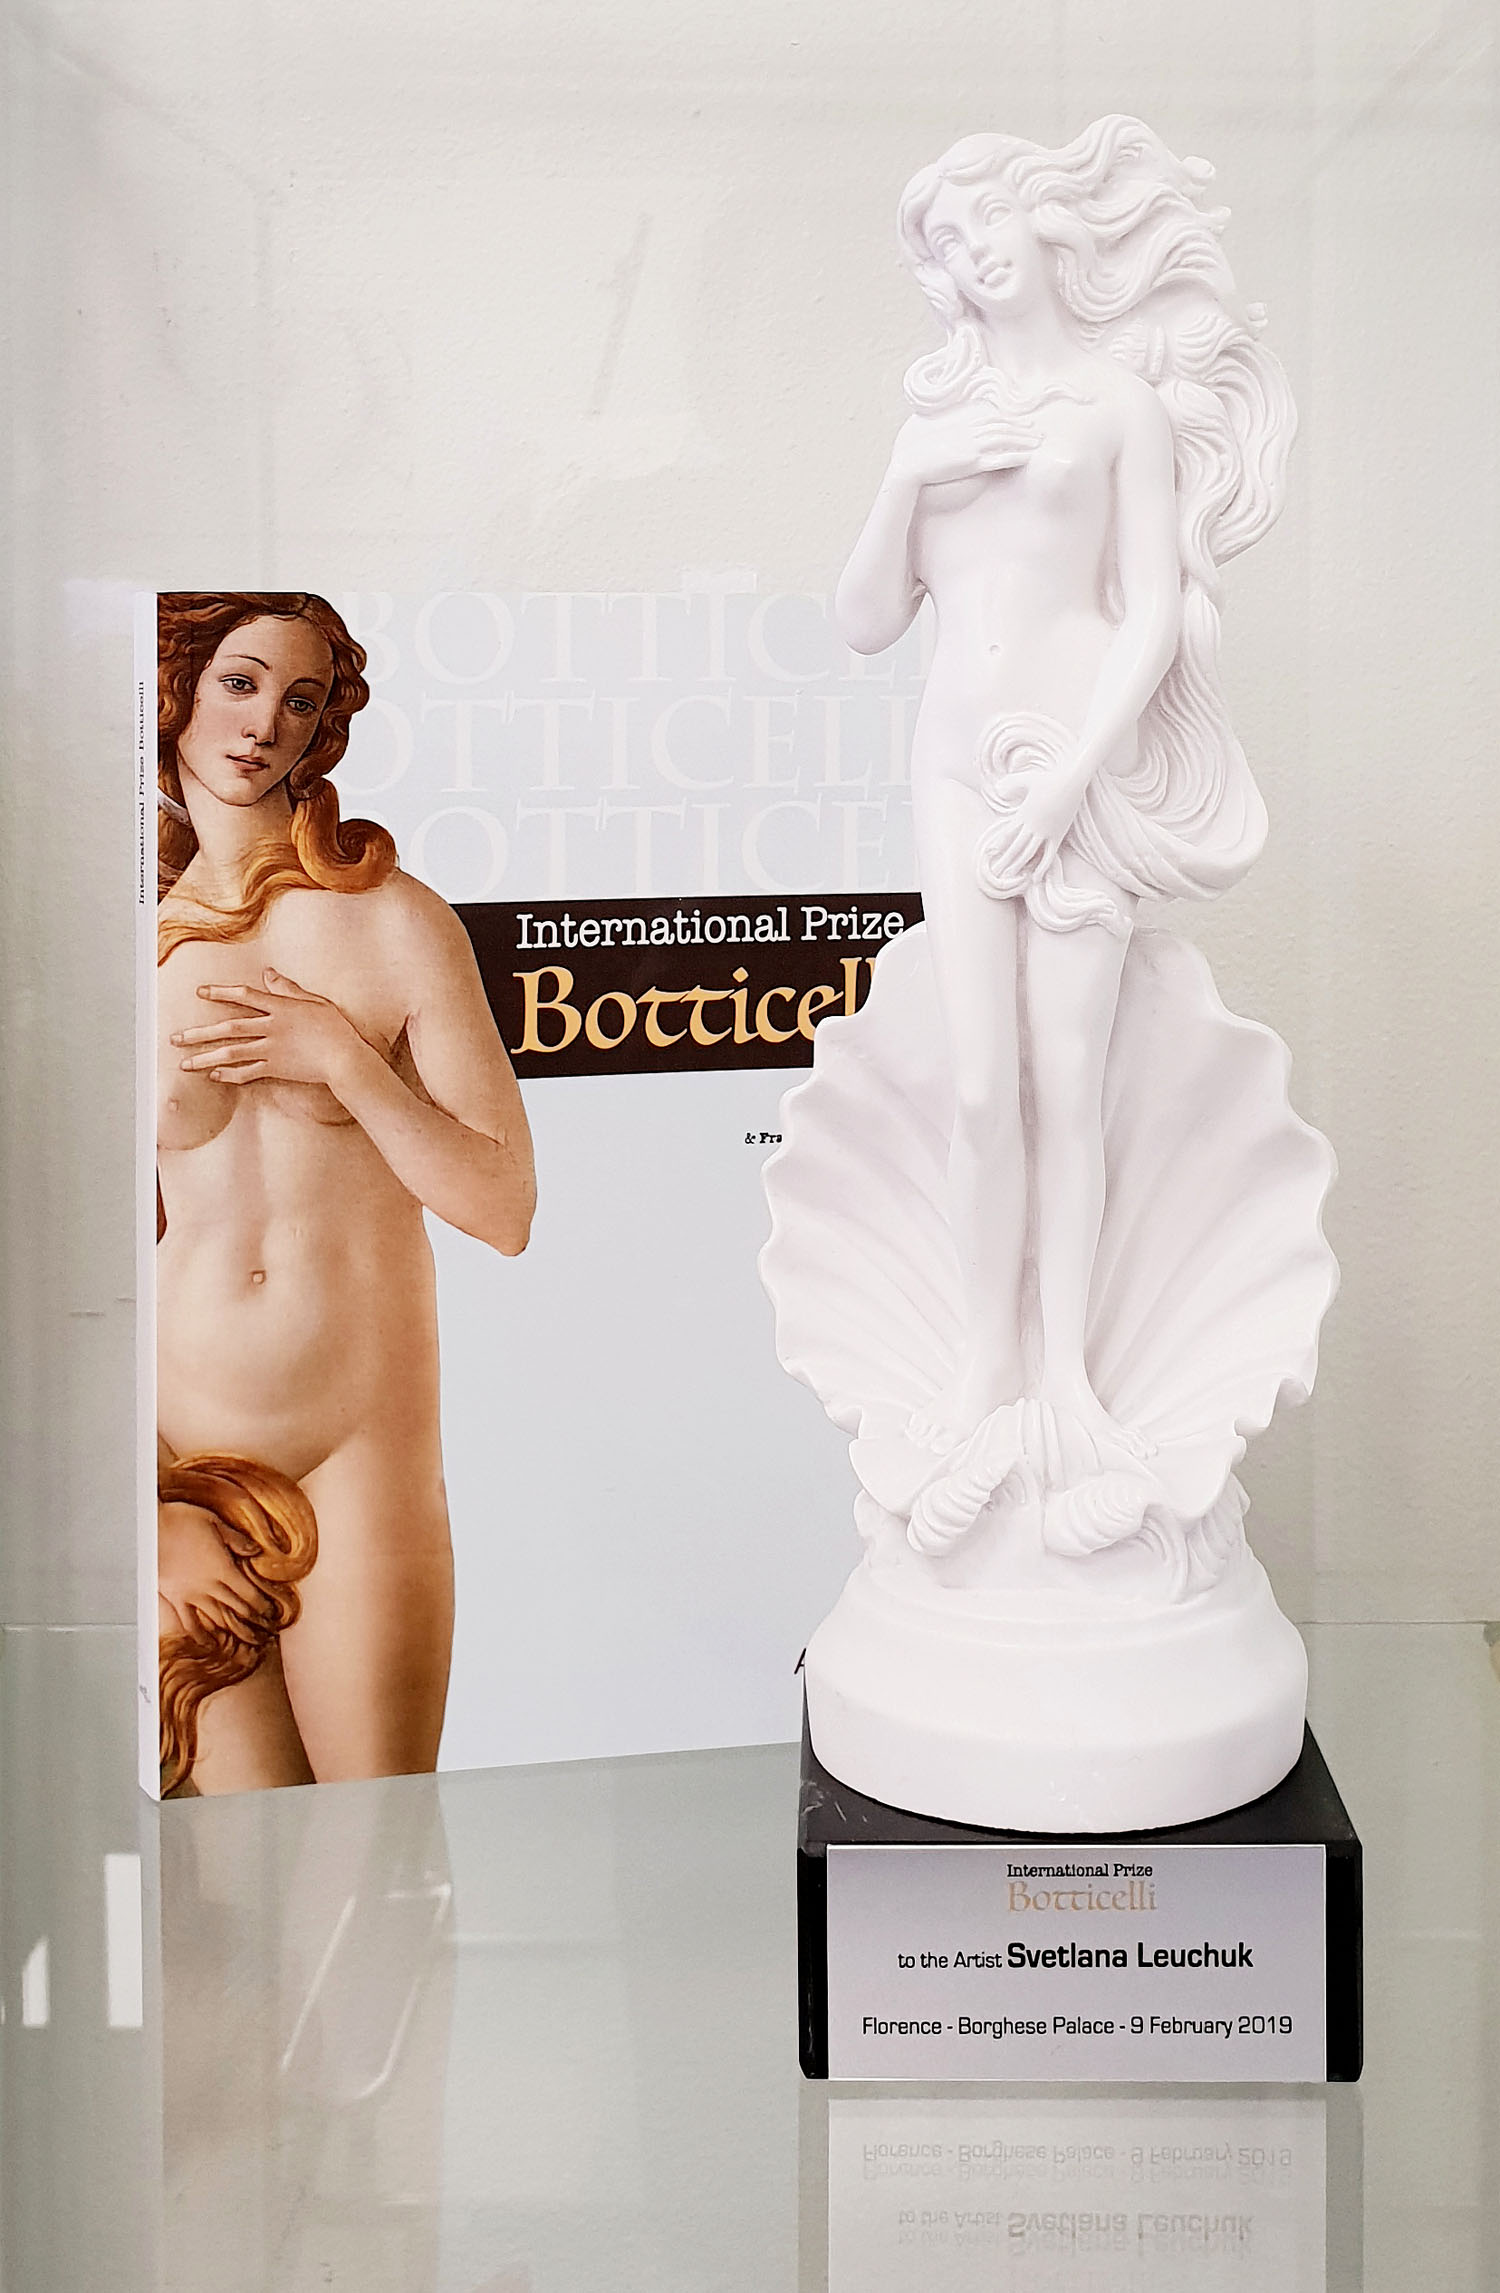 international-prize-botticelli-Lana-Leuchuk